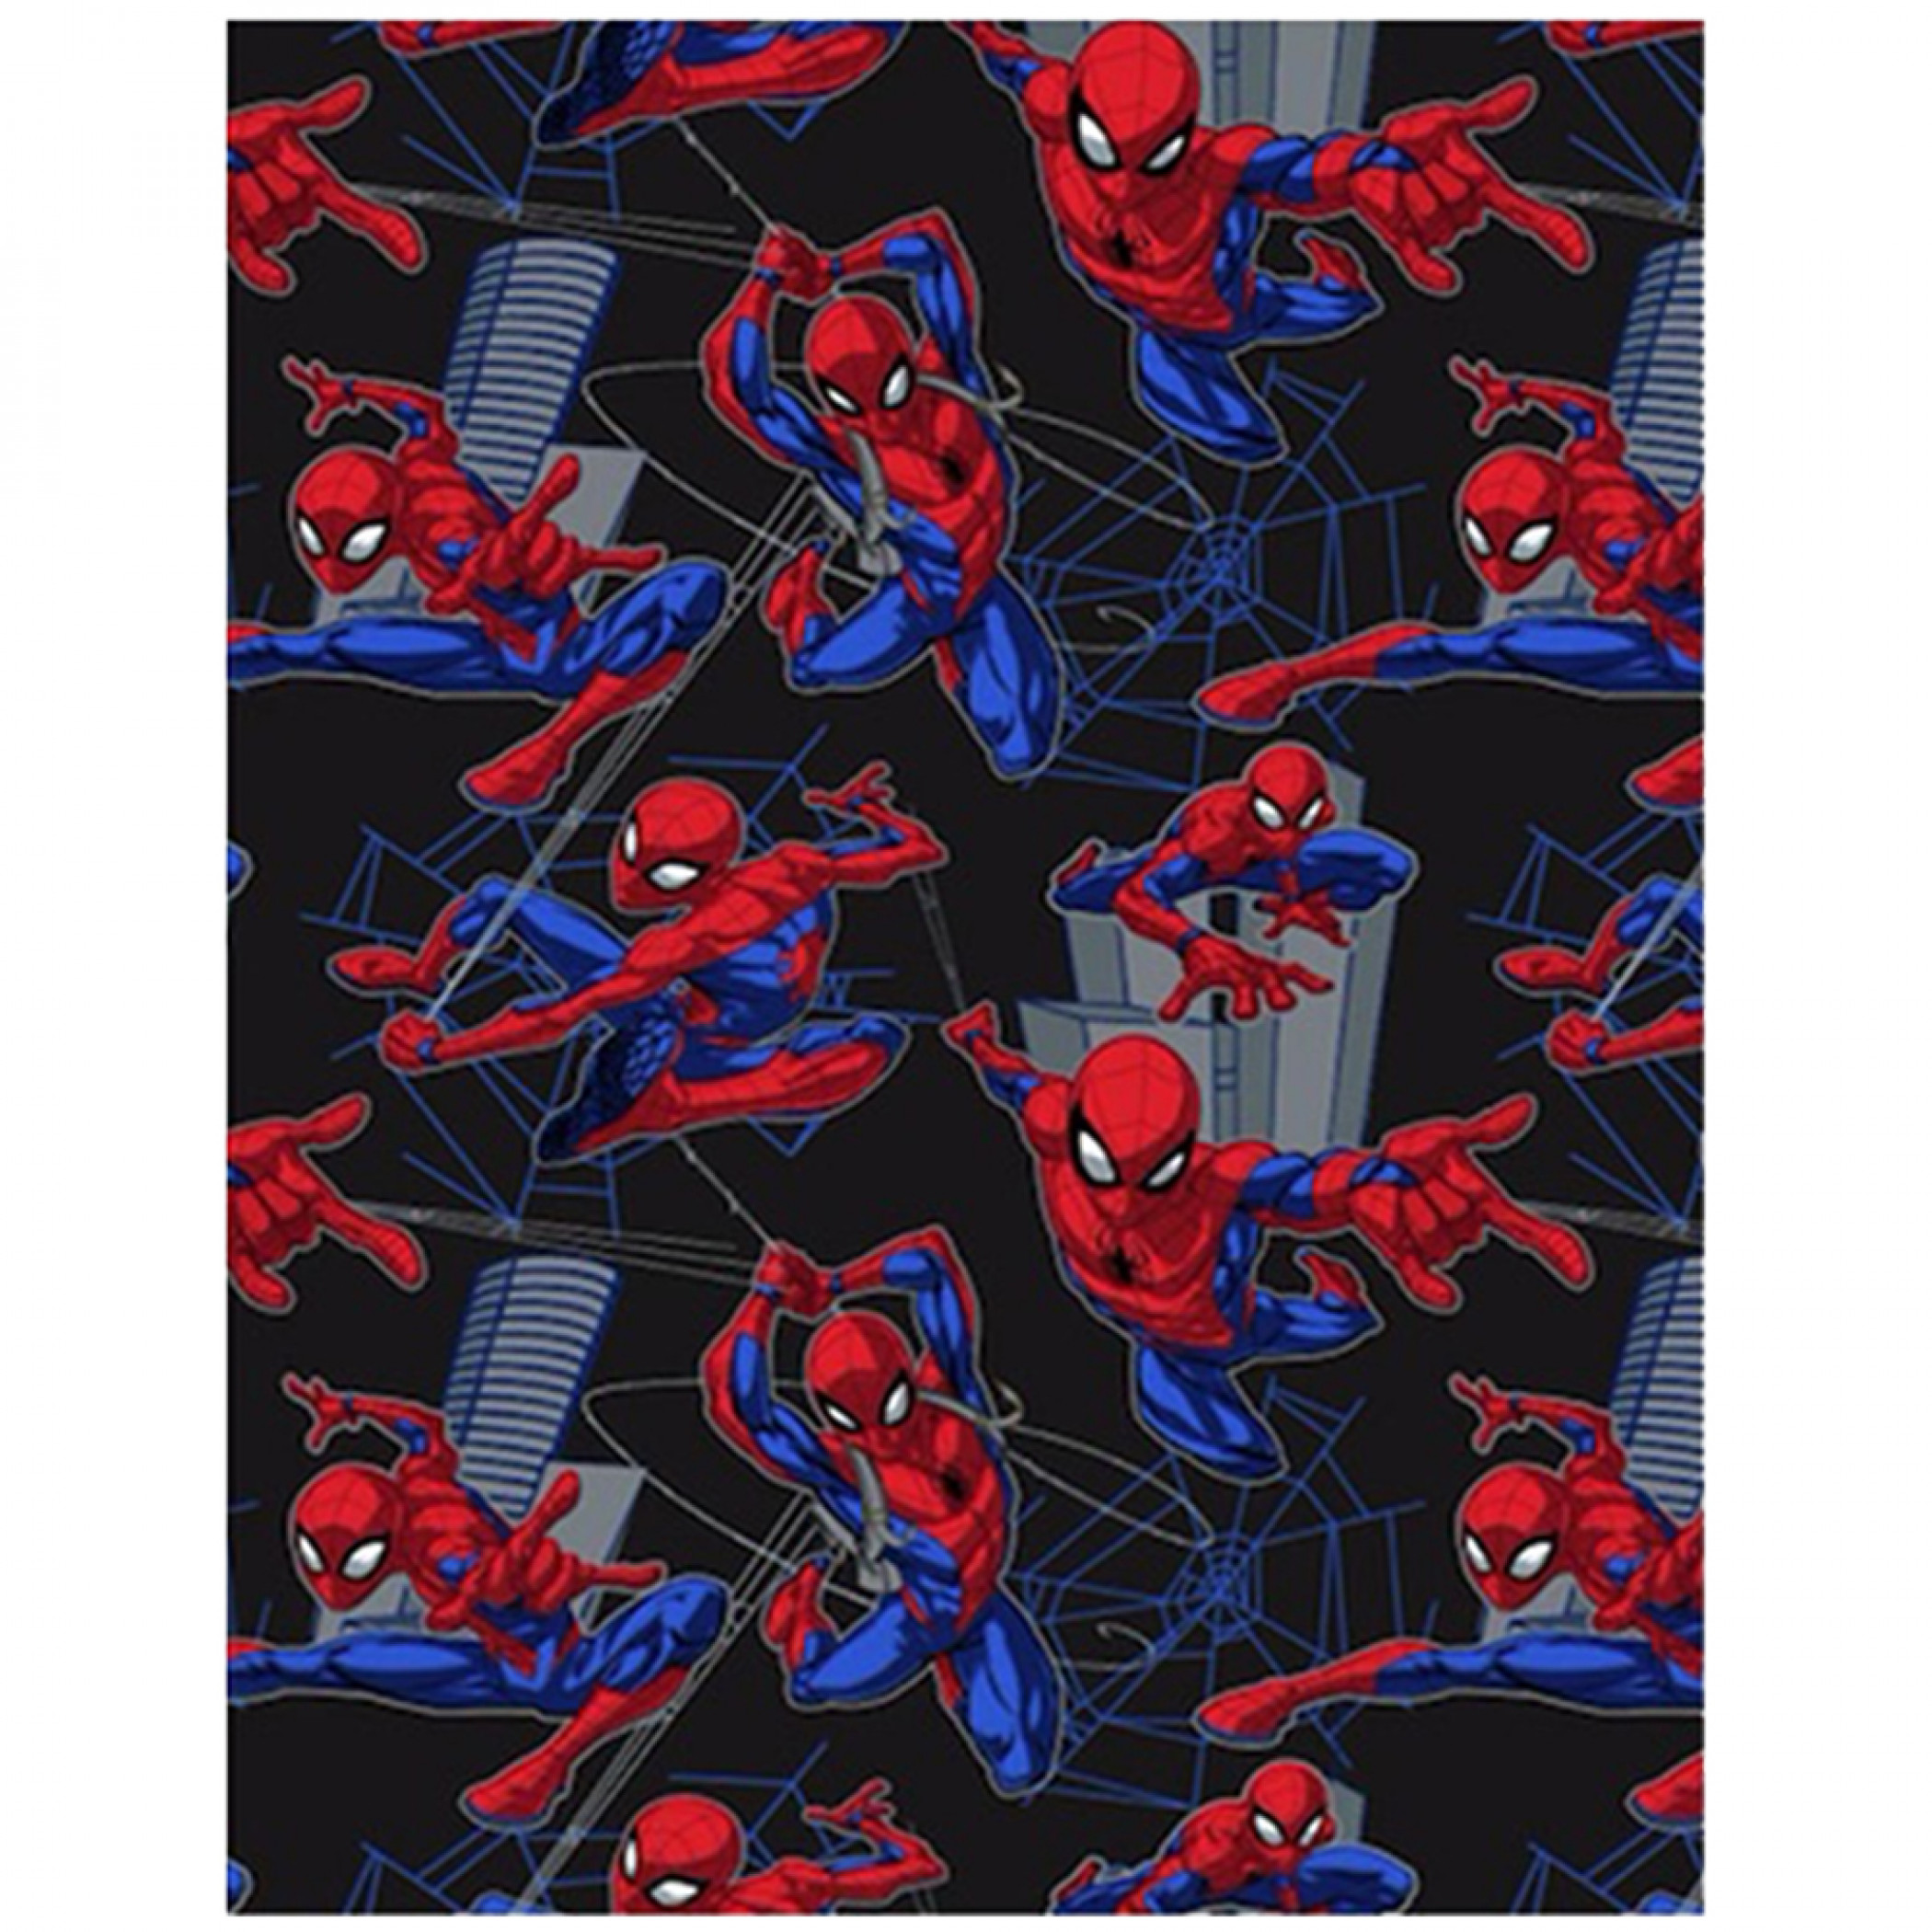 Marvel Comics Spider-Man Web Slinging 45" x 60" Plush Throw Blanket